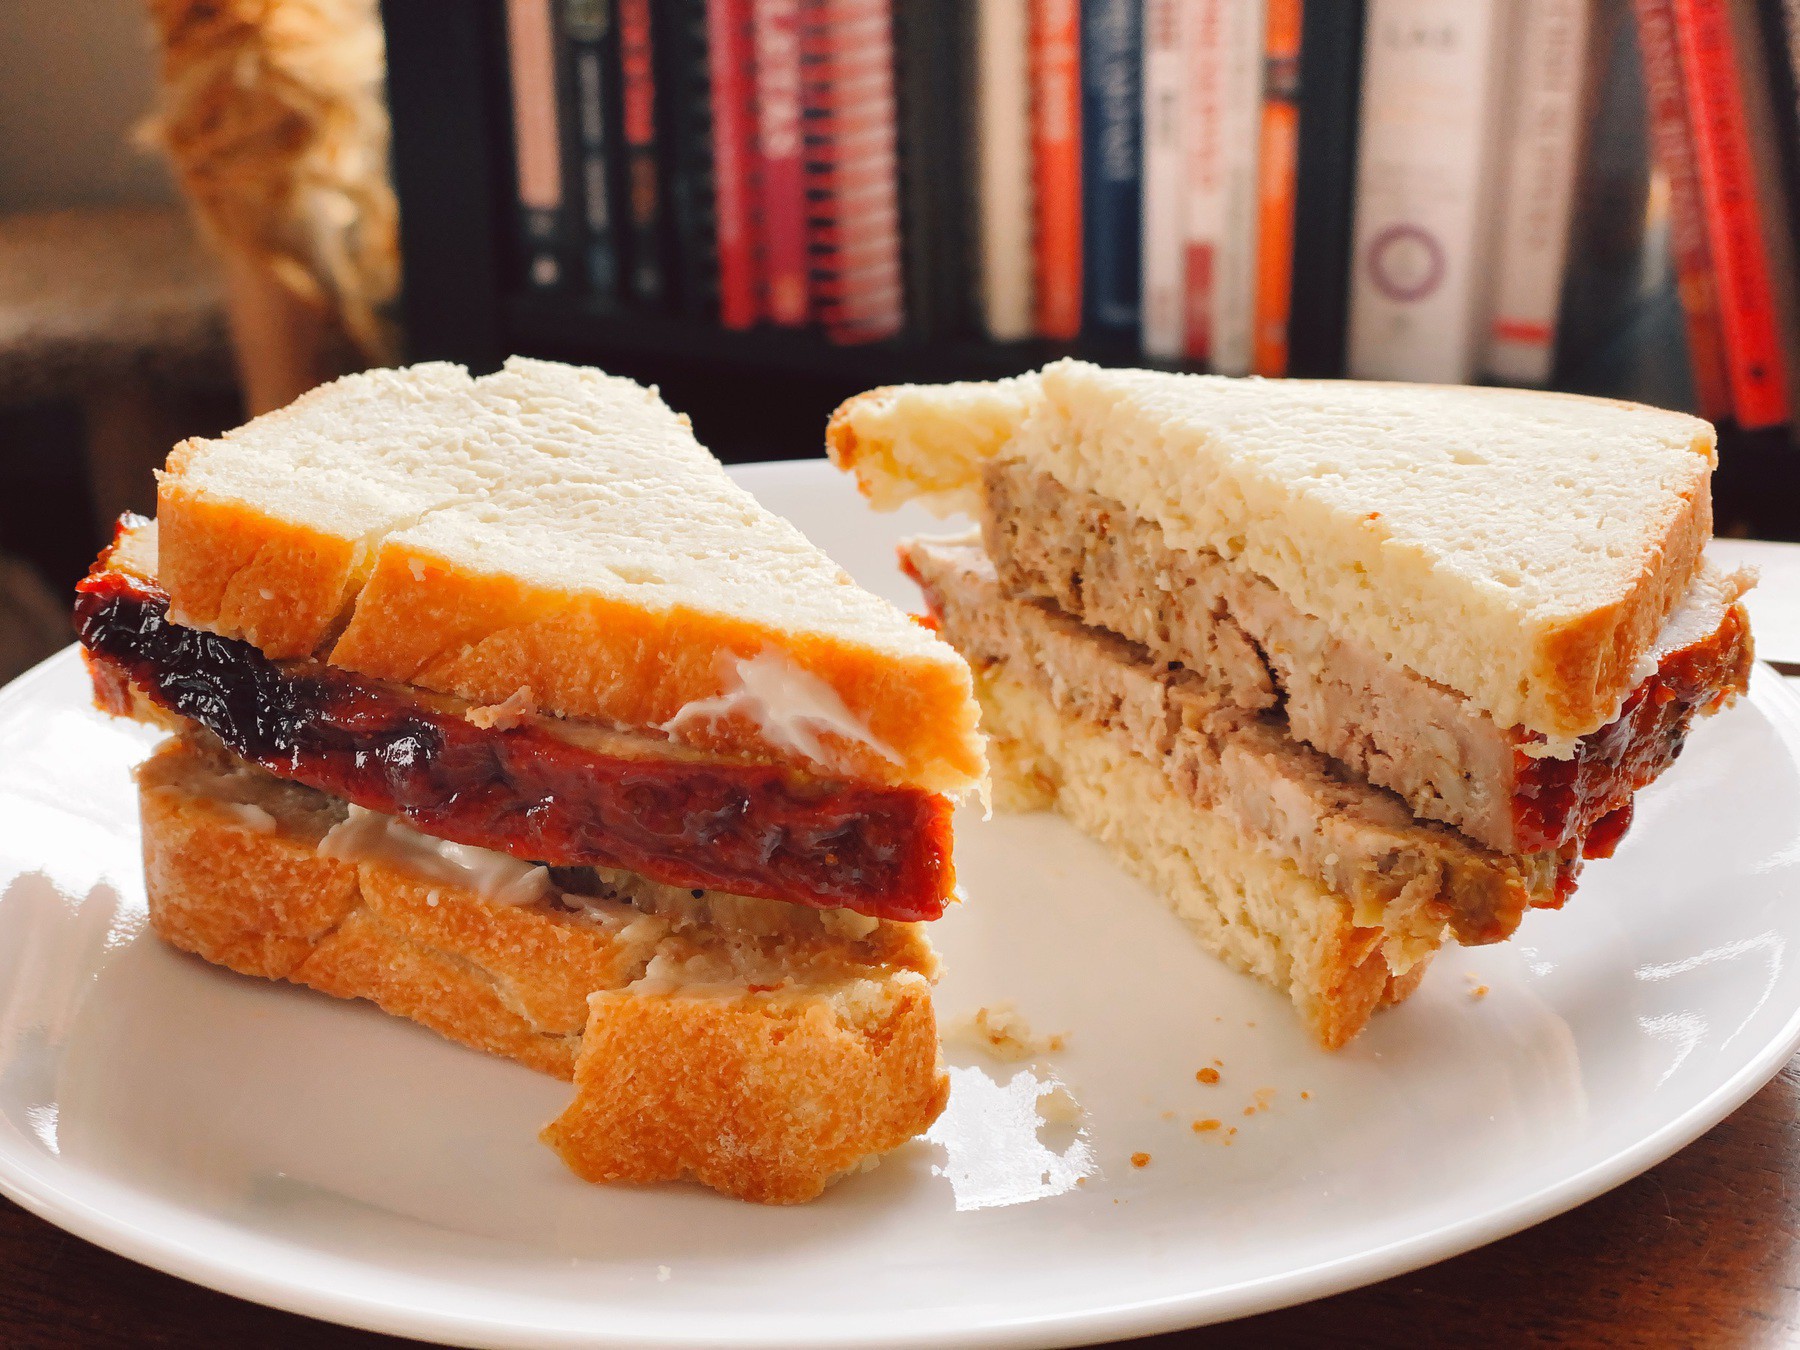 Sandwich of sliced homemade meatloaf on homemade bread.